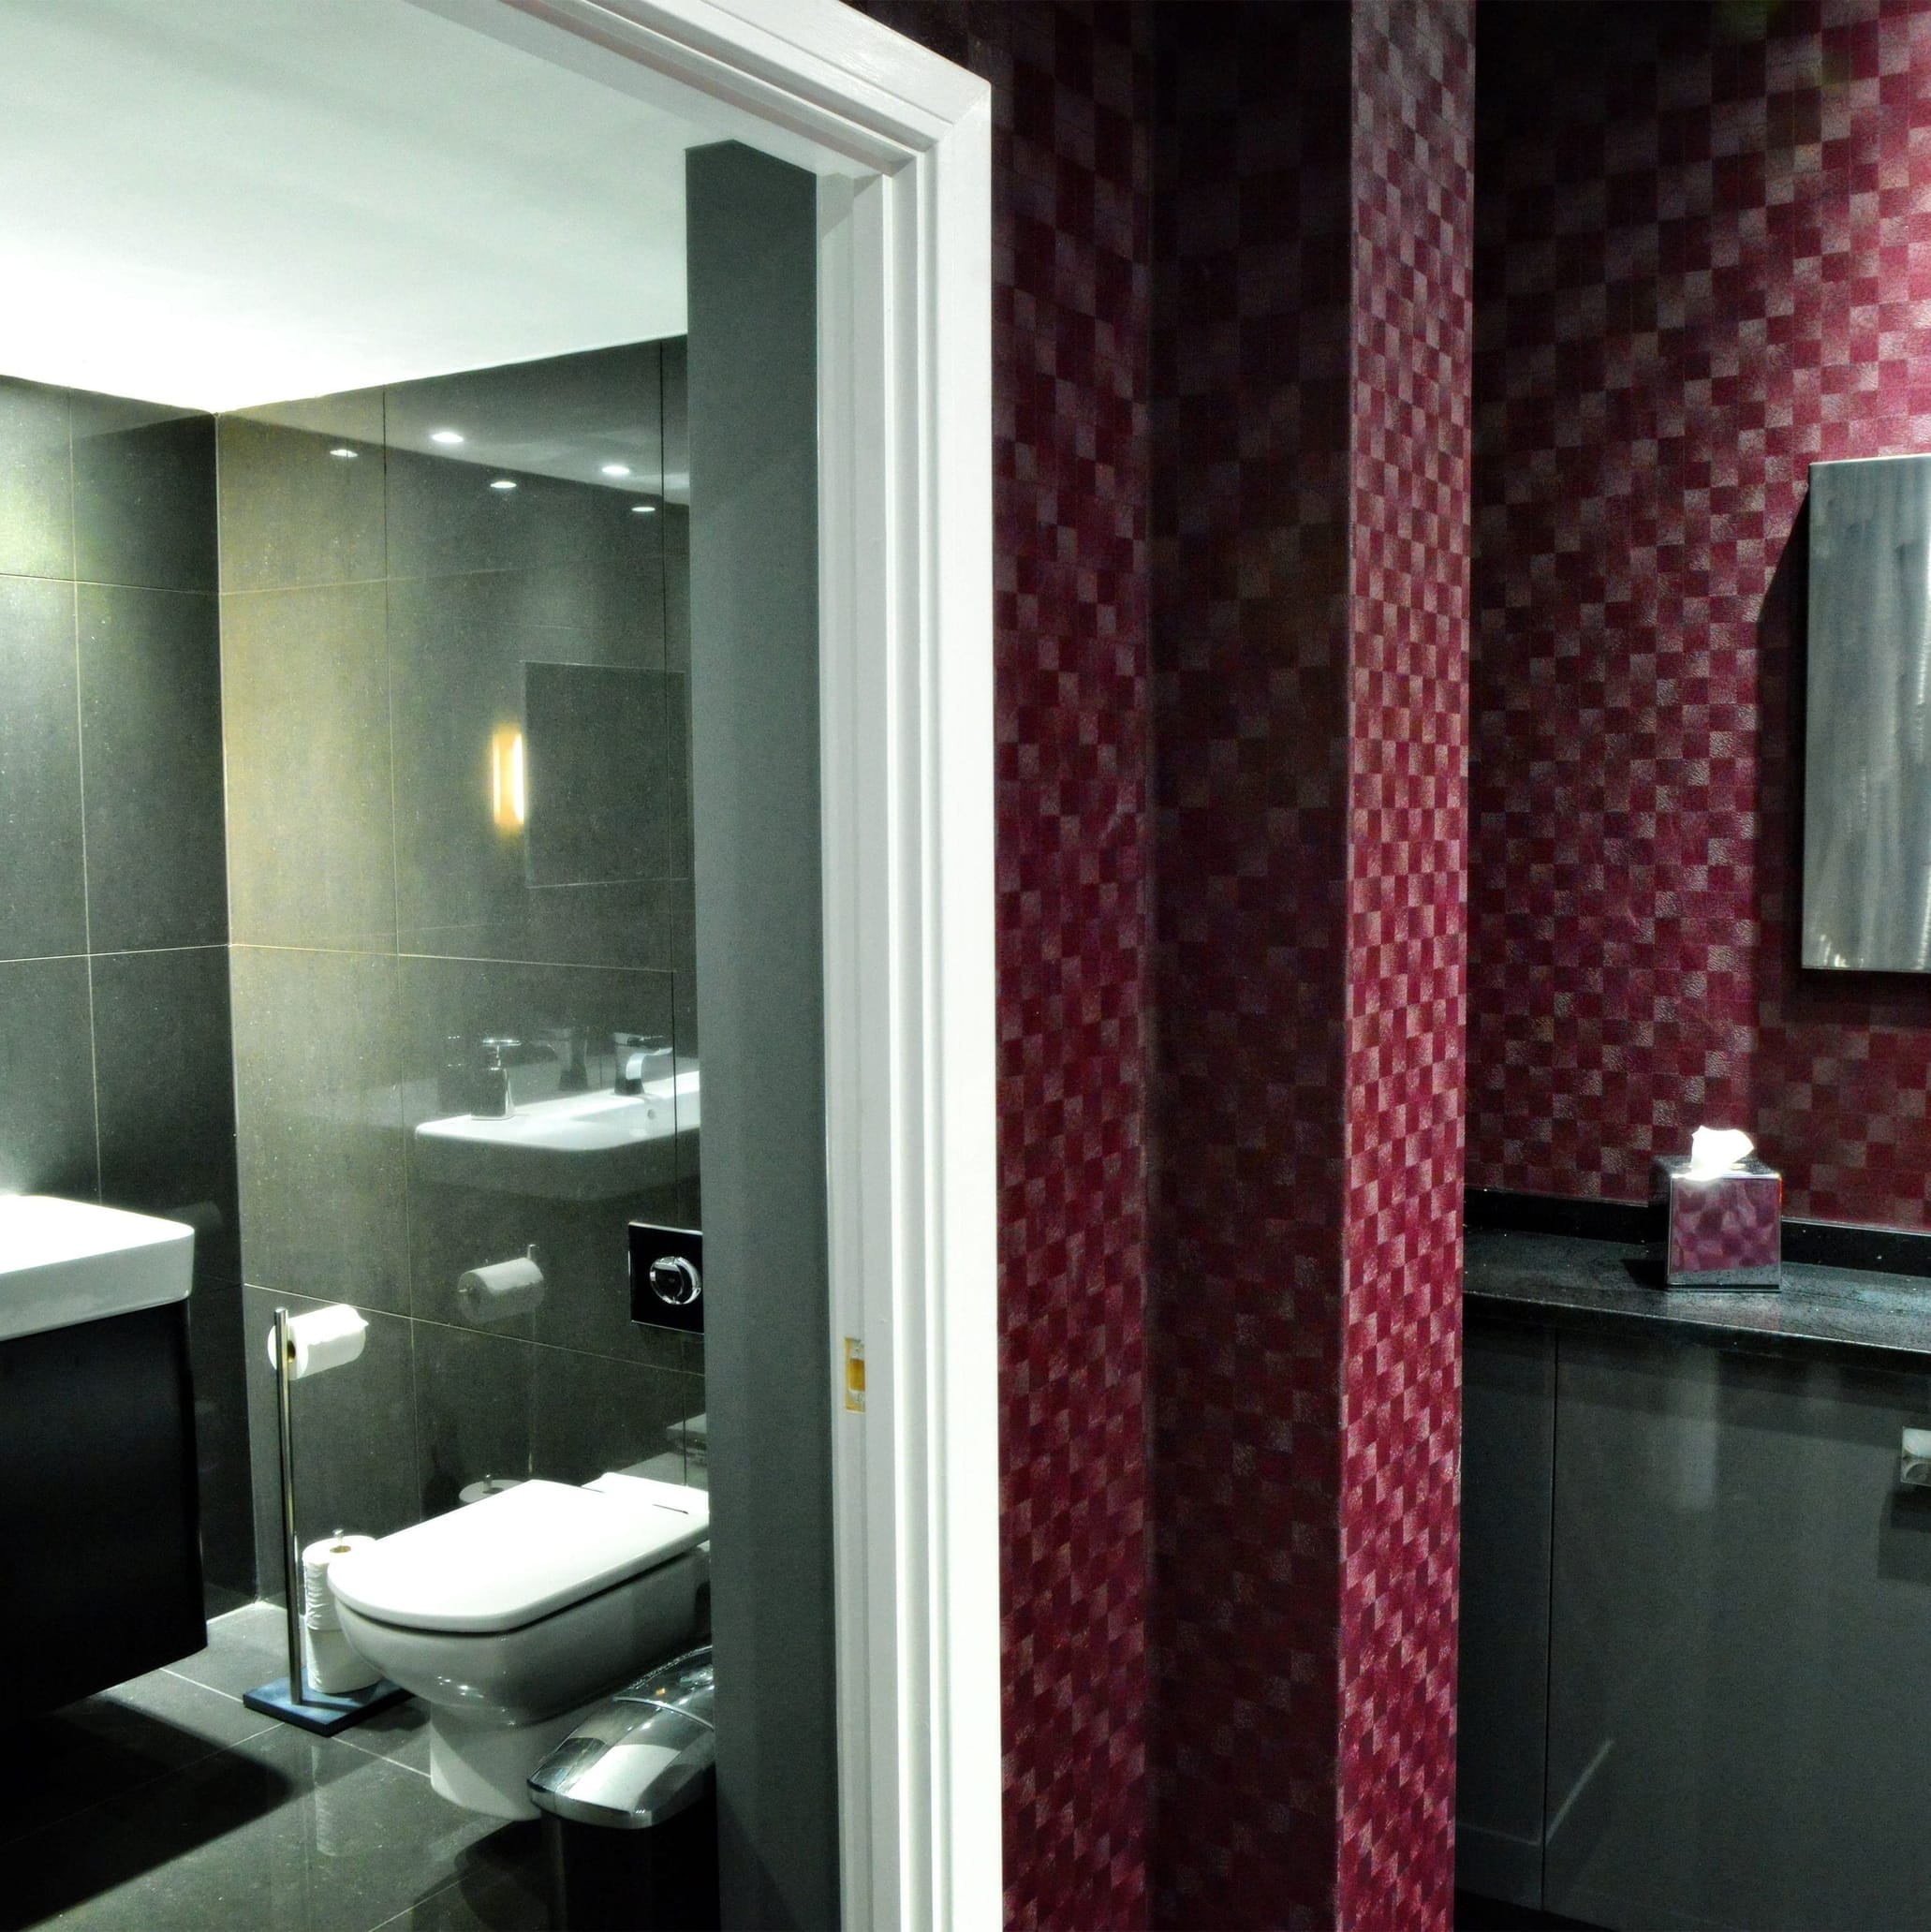 High end dressing rooms and bathrooms at Mark Glenn's London female hair loss studio